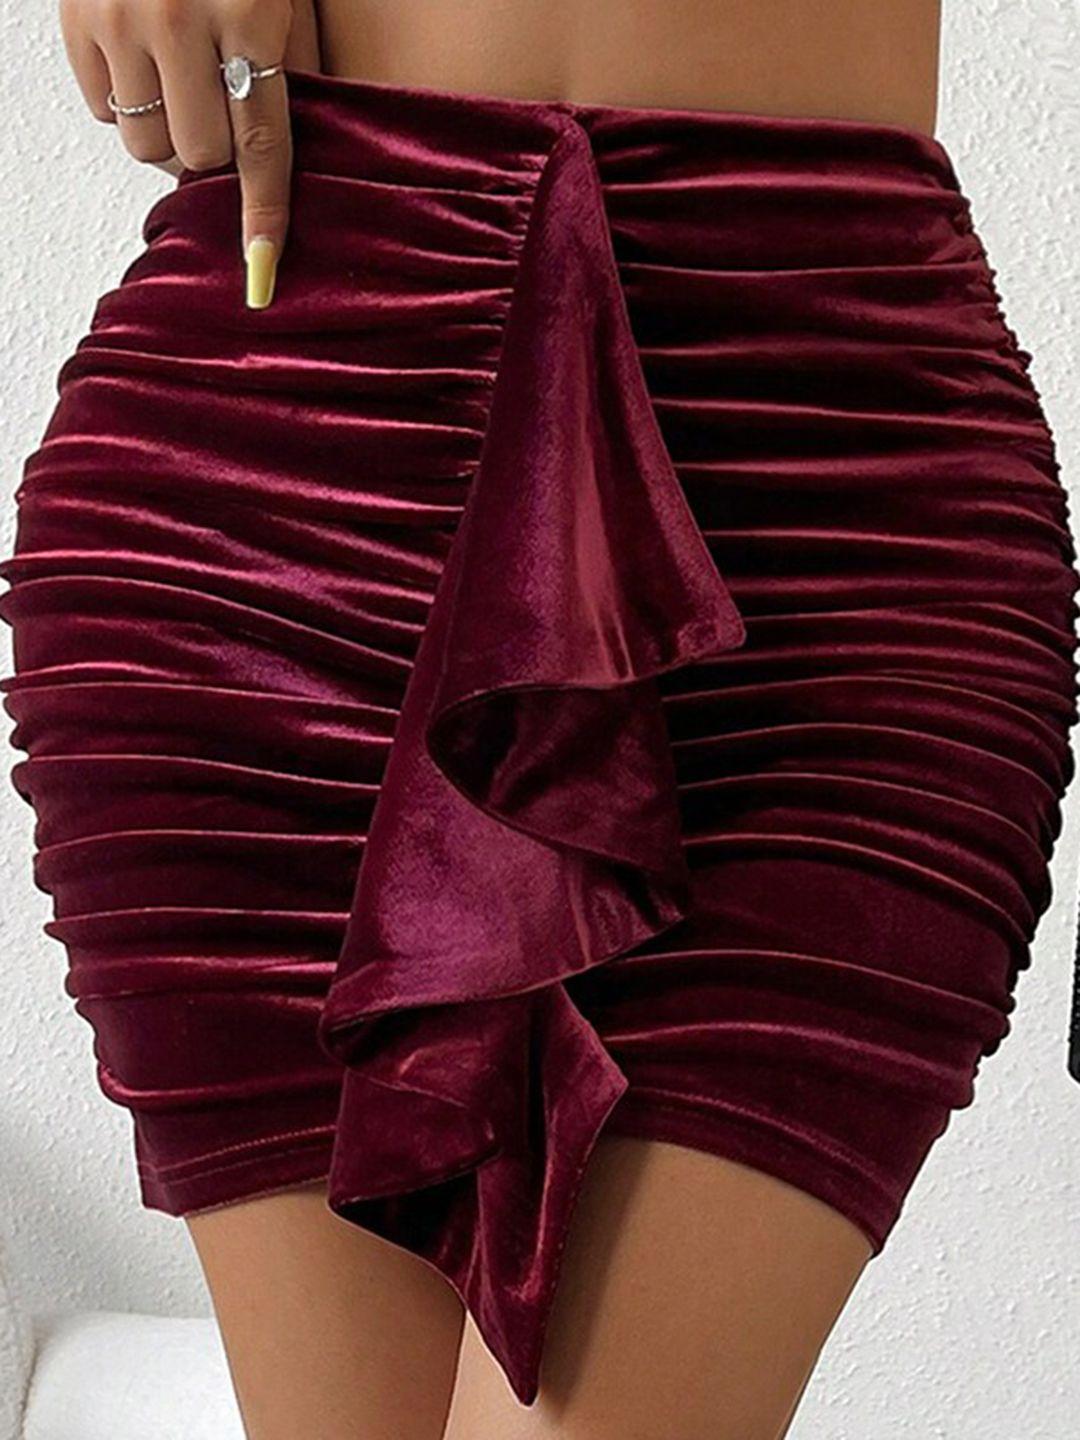 stylecast skorts mini skirt